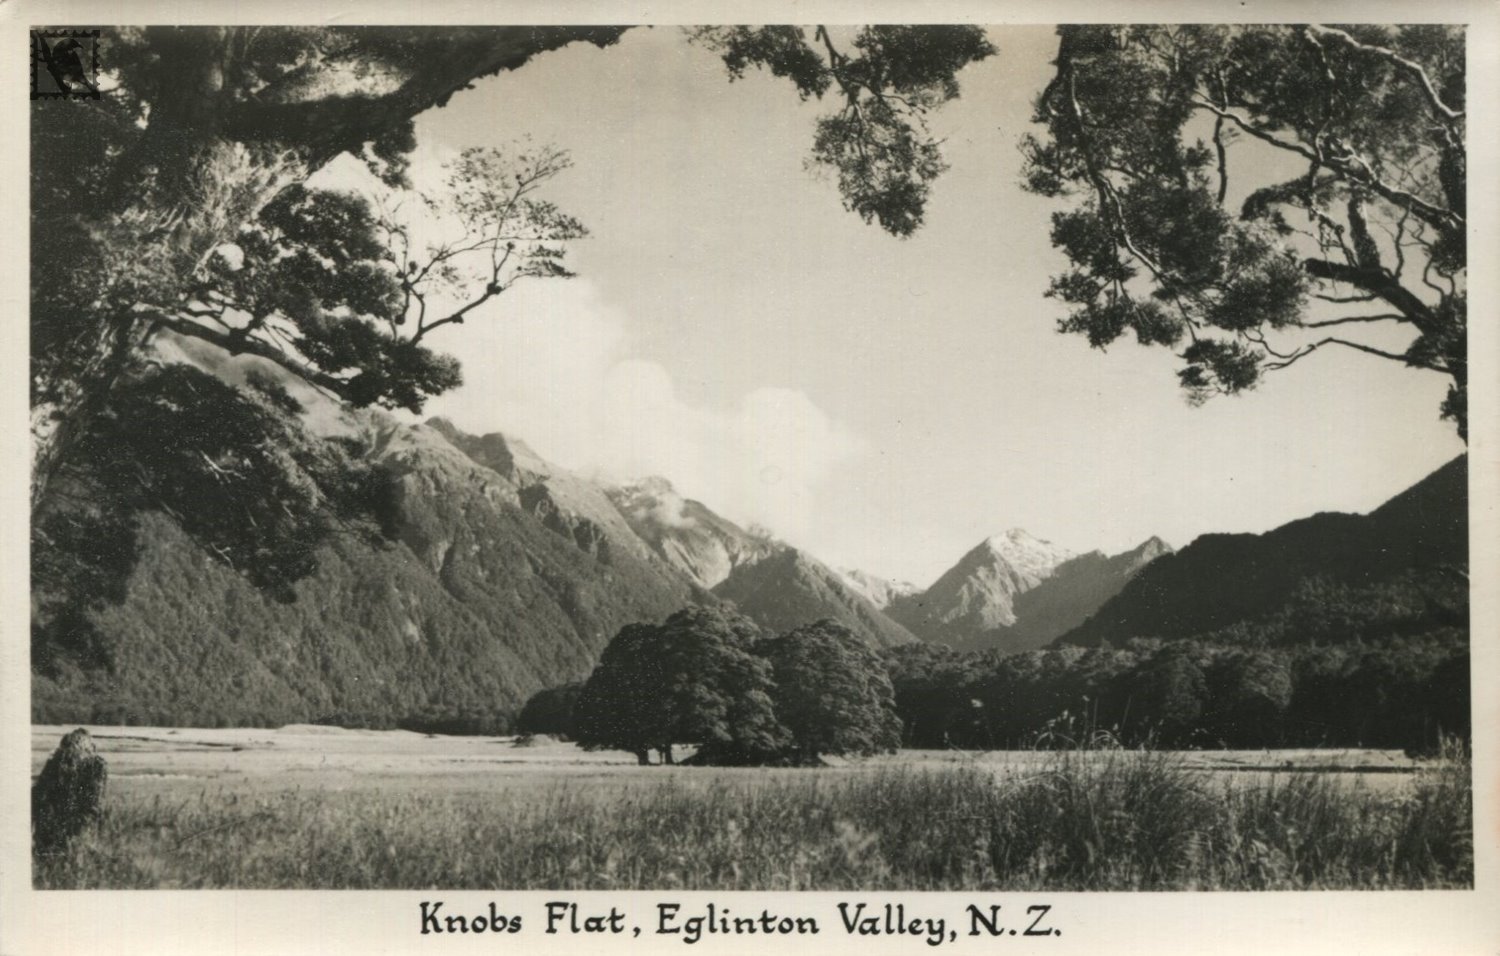 Fiordland Eglinton Valley - Knobs Flat